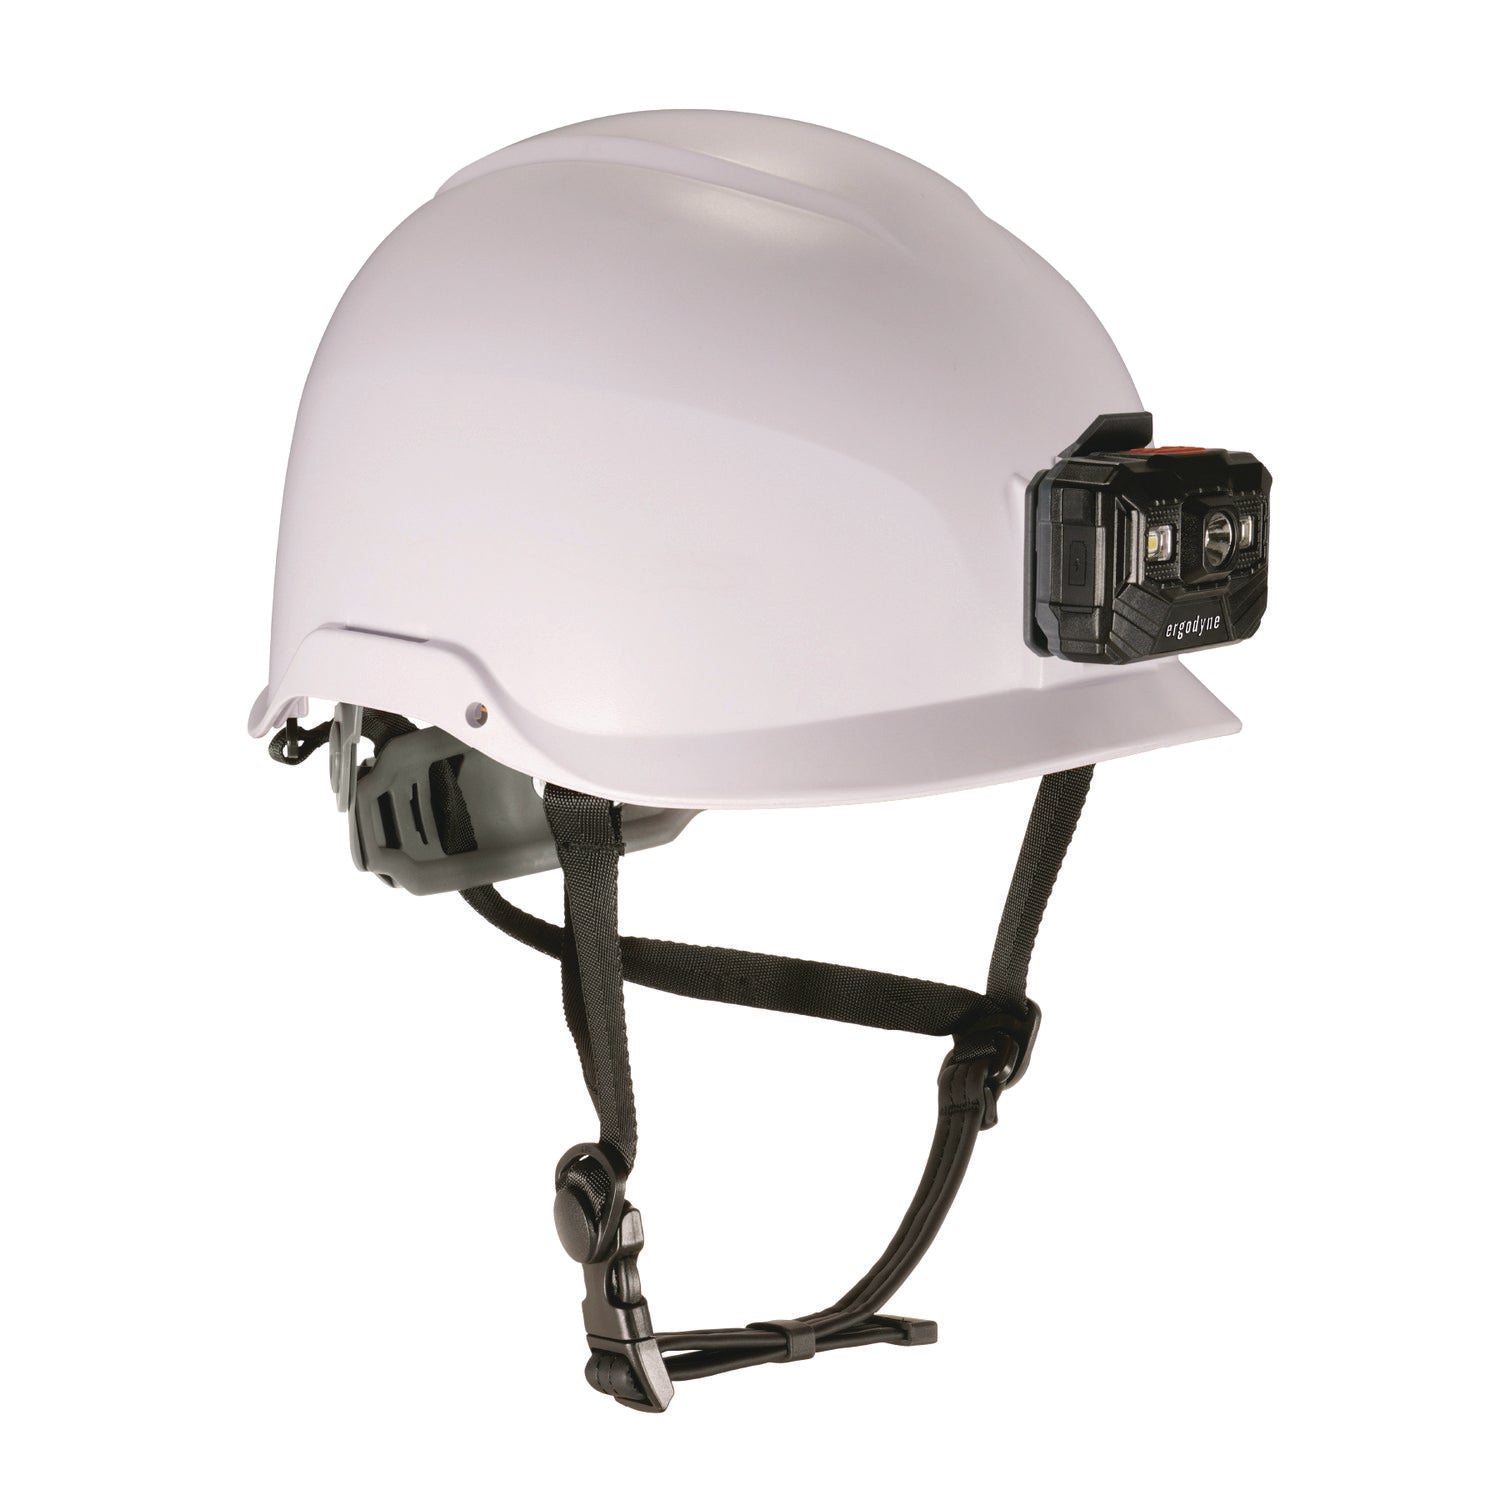 skullerz-8976led-class-e-safety-helmet-with-led-light-6-point-rachet-suspension-white-ships-in-1-3-business-days_ego60261 - 1